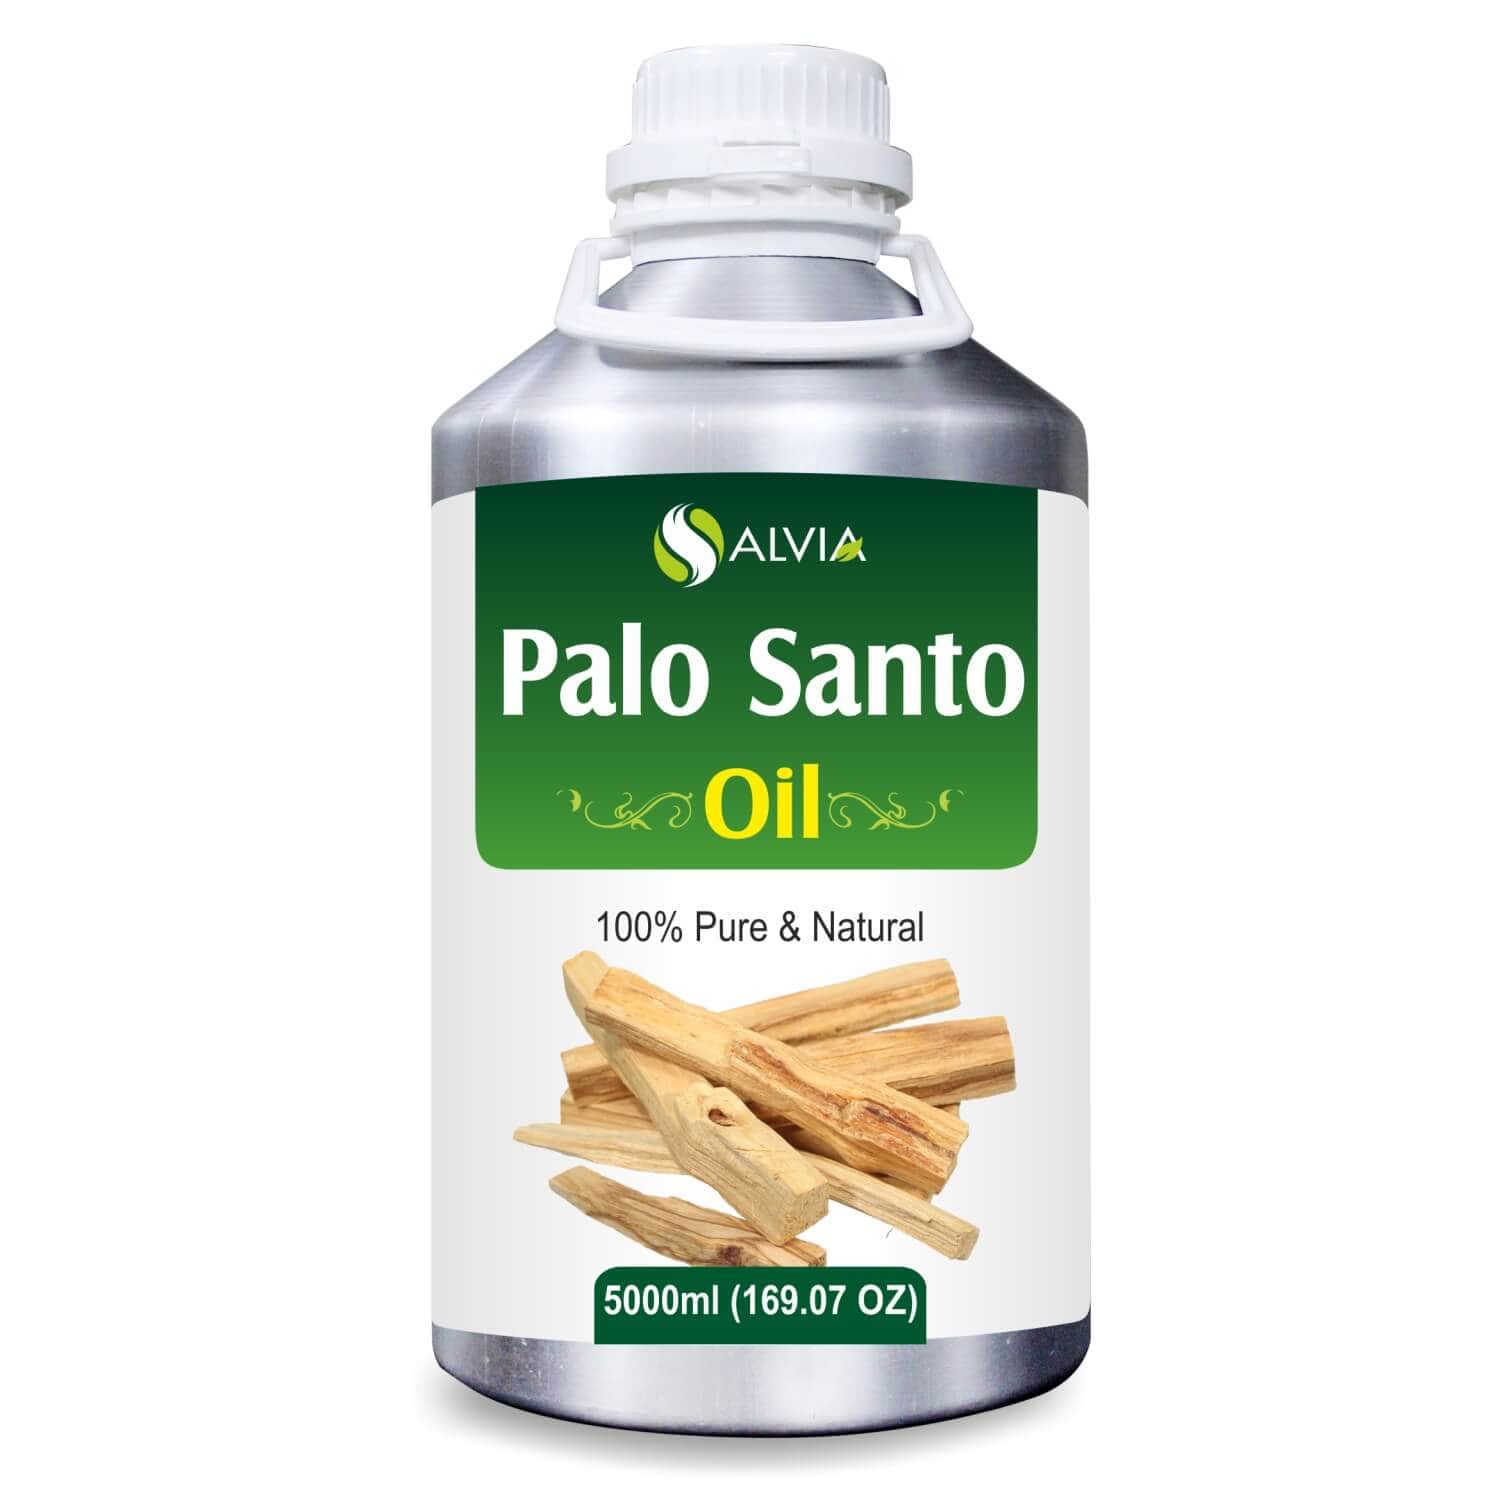 Salvia Natural Essential Oils 5000ml Palo Santo Oil (Bursera Graveolens) 100% Natural Pure Essential Oil Undiluted For Massage, Aromatherapy, Headaches & More!